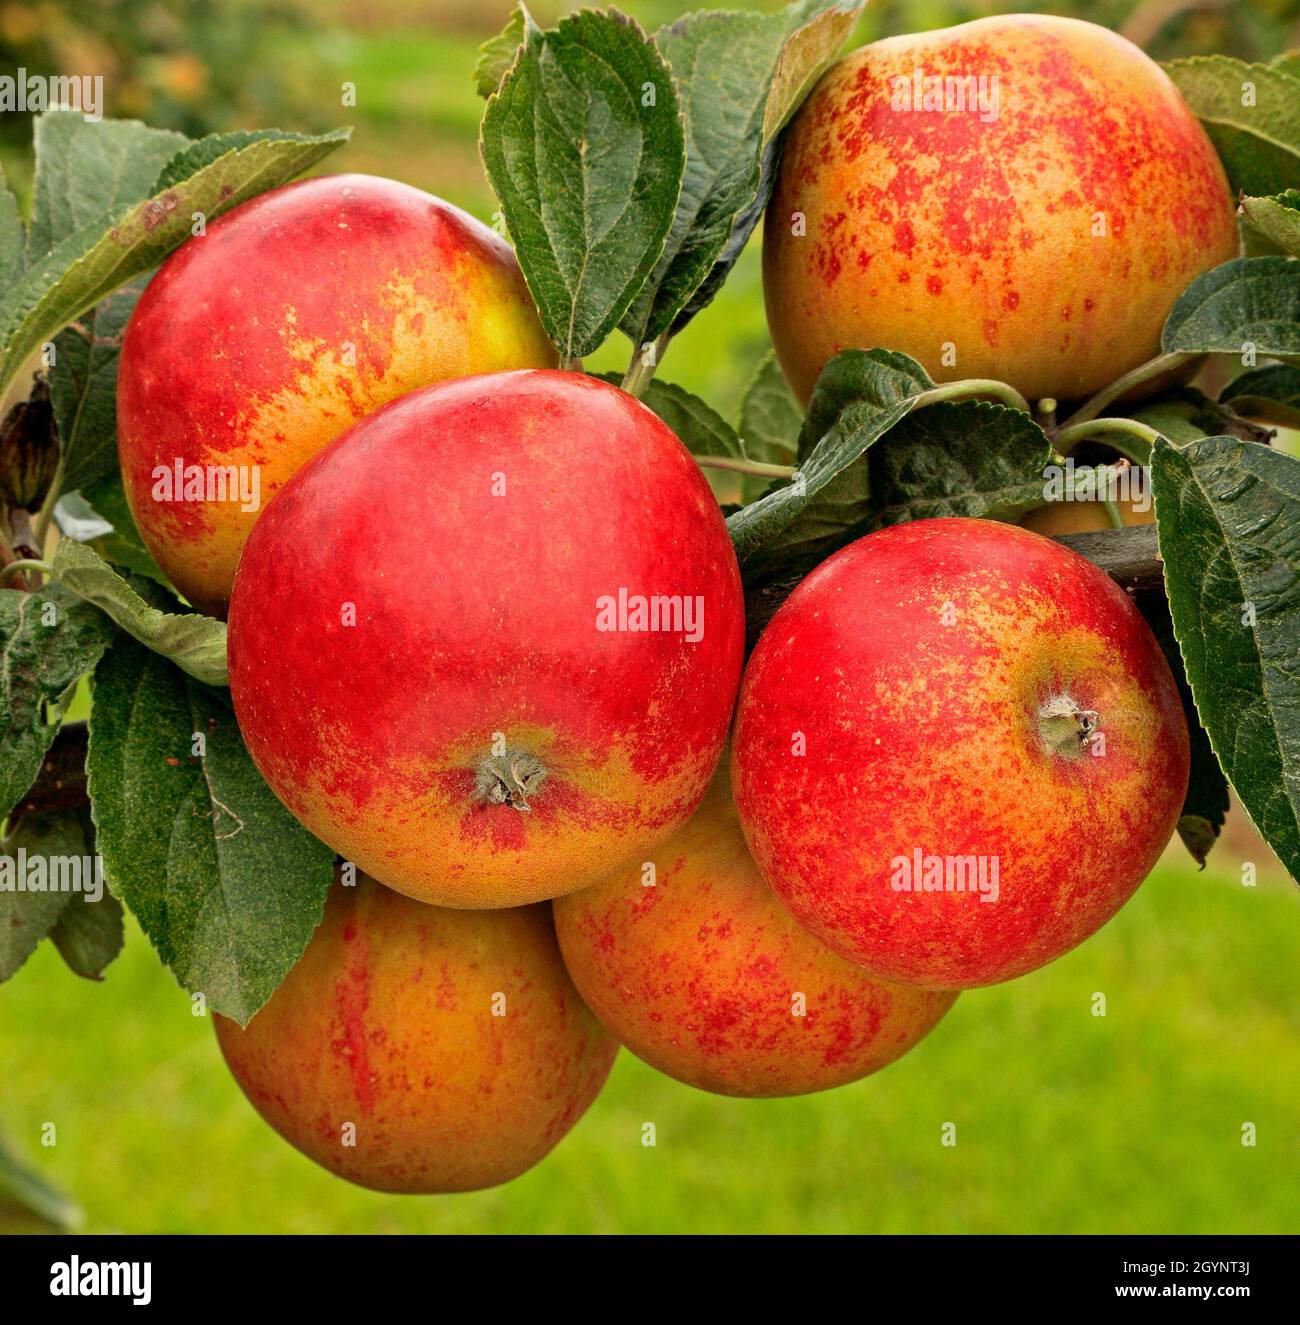 Apple, 'Norfolk Royal Russet' Stock Photo